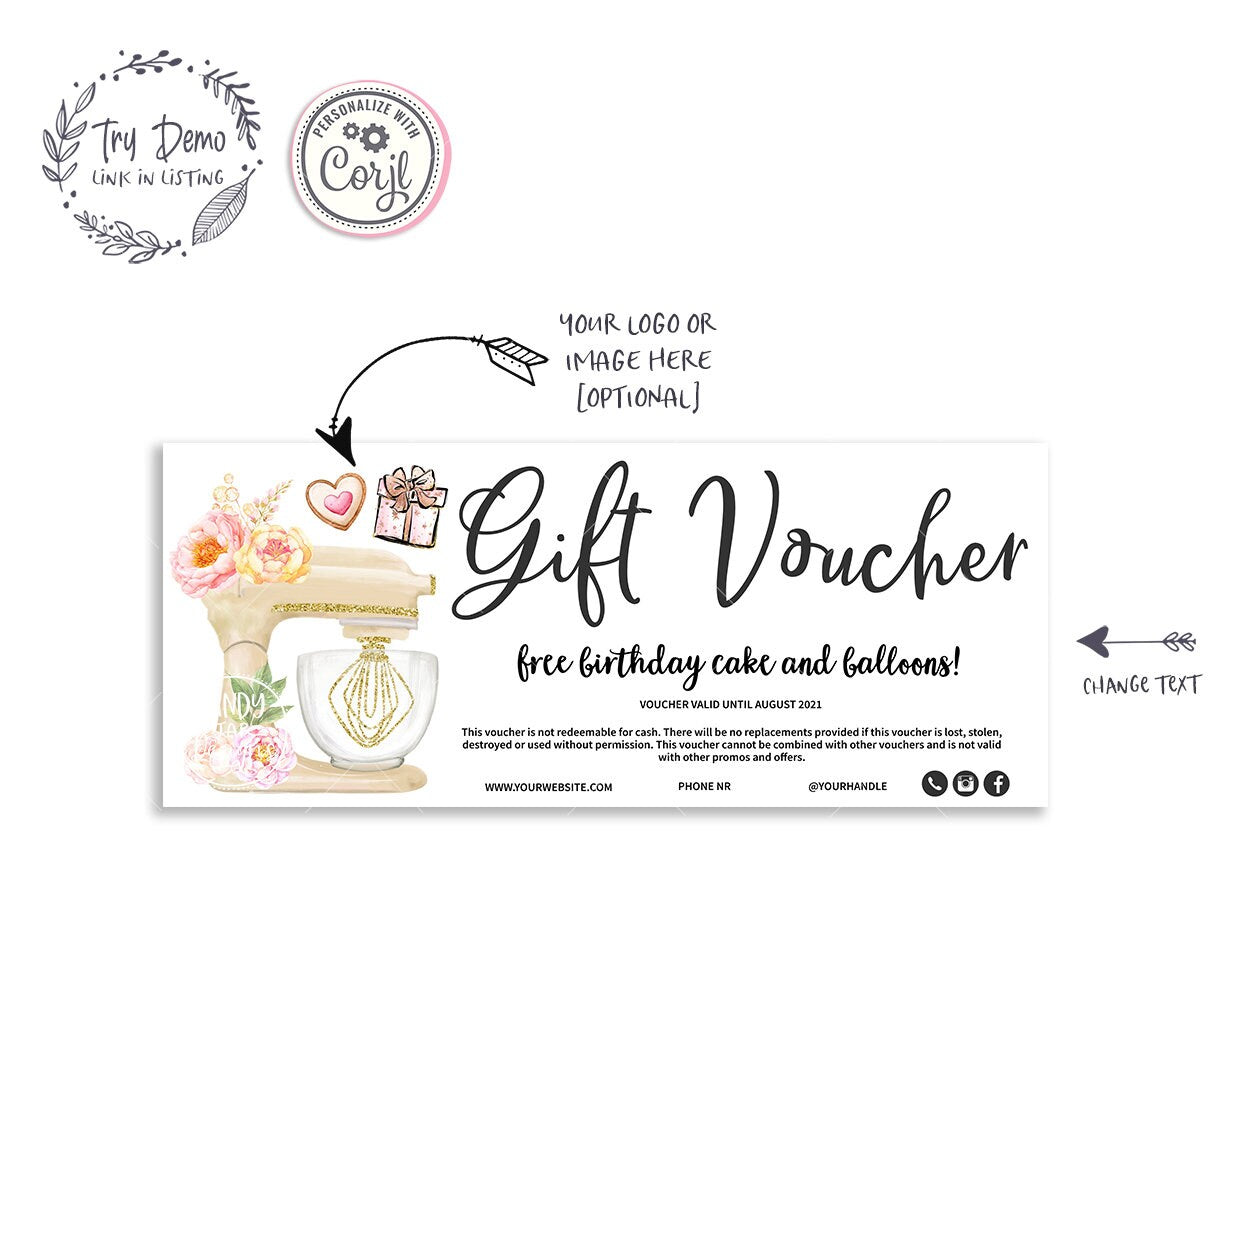 Bakery Gift Voucher, Kitchen Mixer